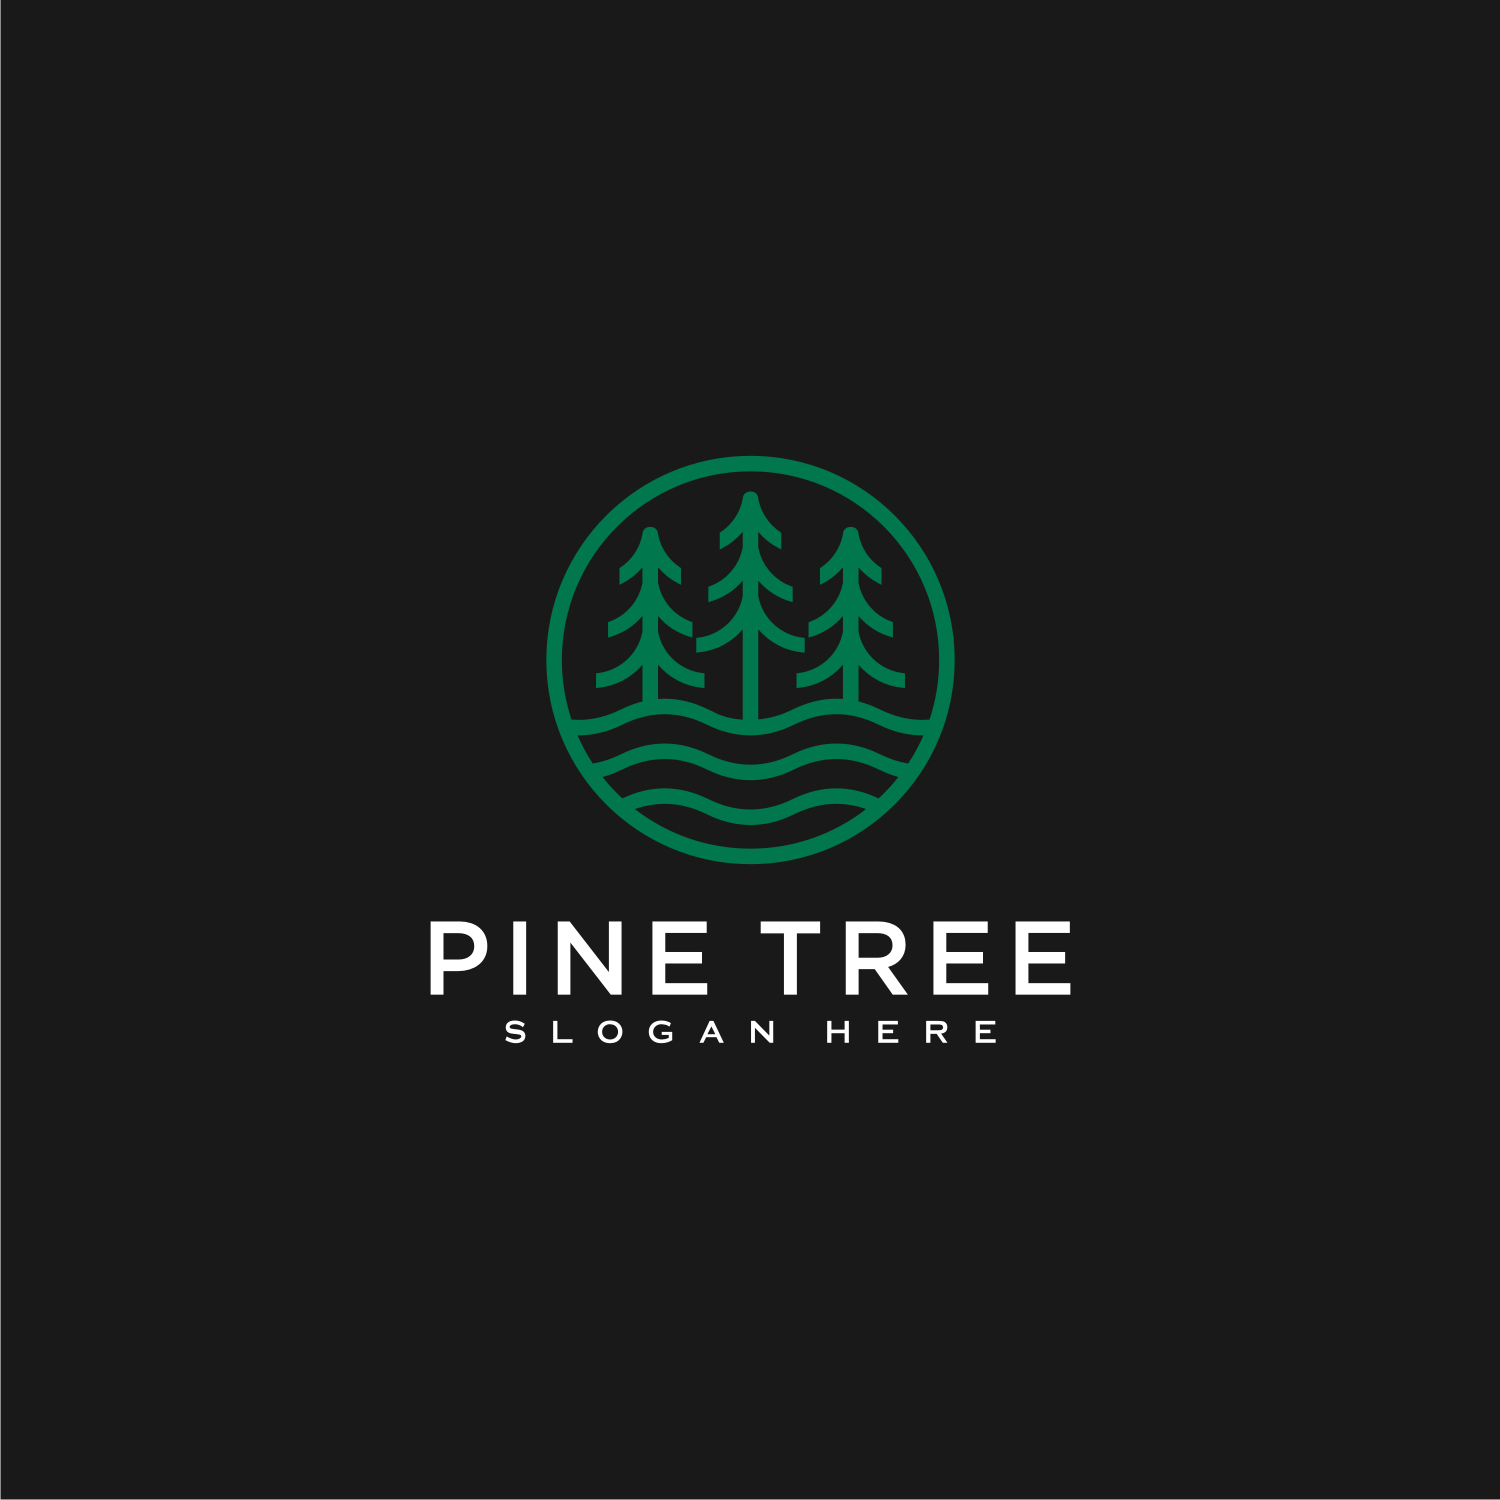 Pine Tree Beautiful Logo Vector Design Template.